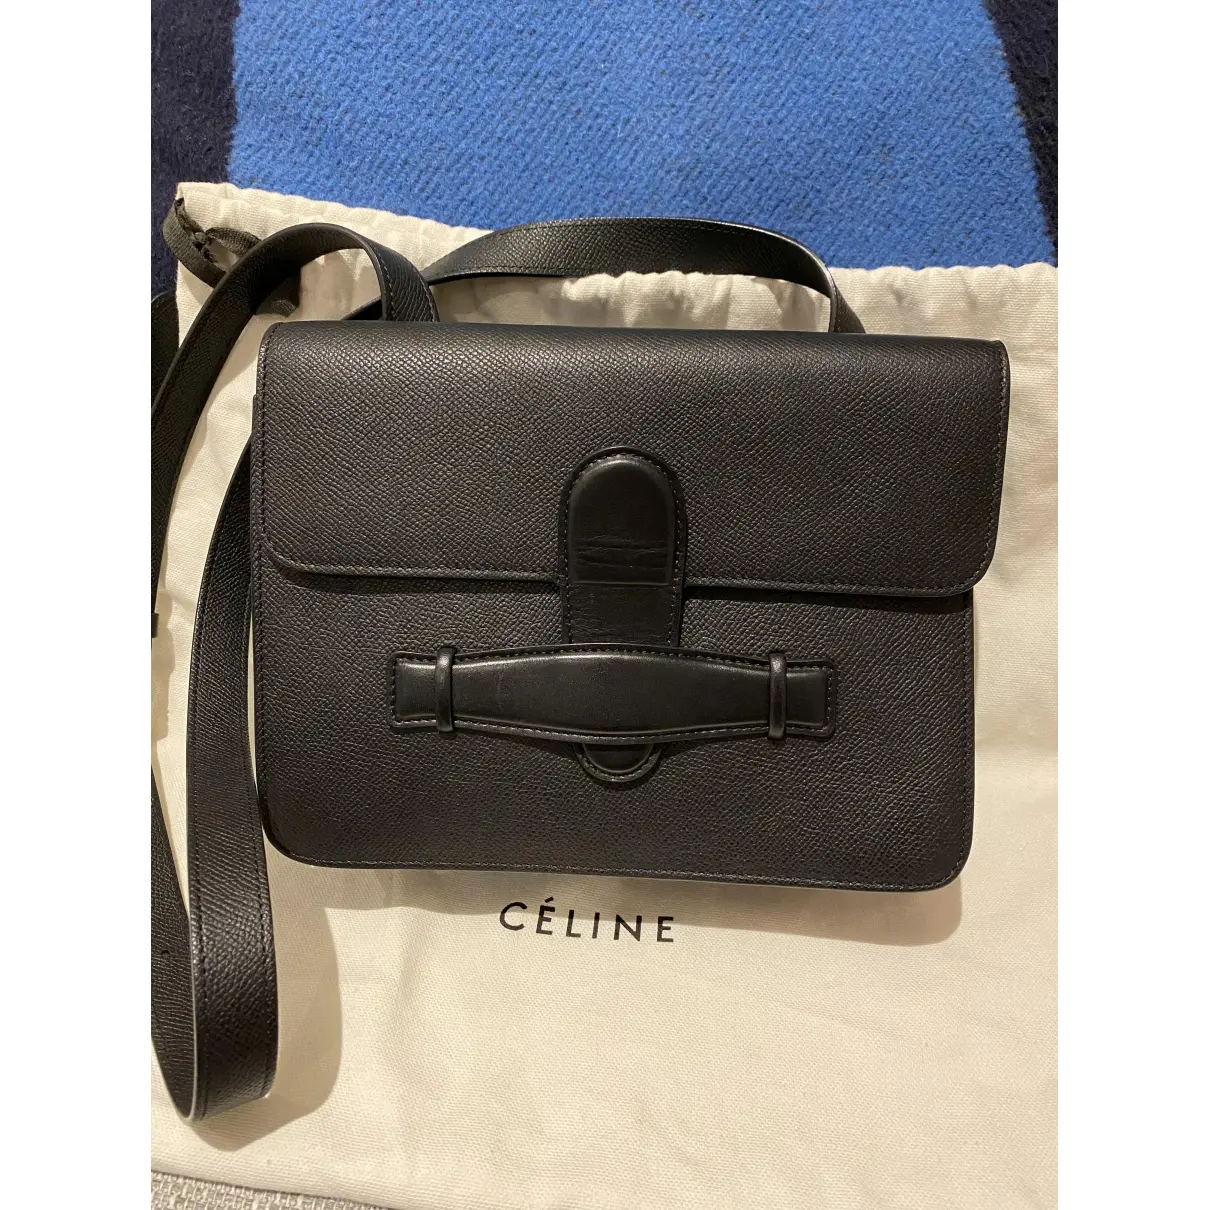 Celine Symmetrical leather crossbody bag for sale